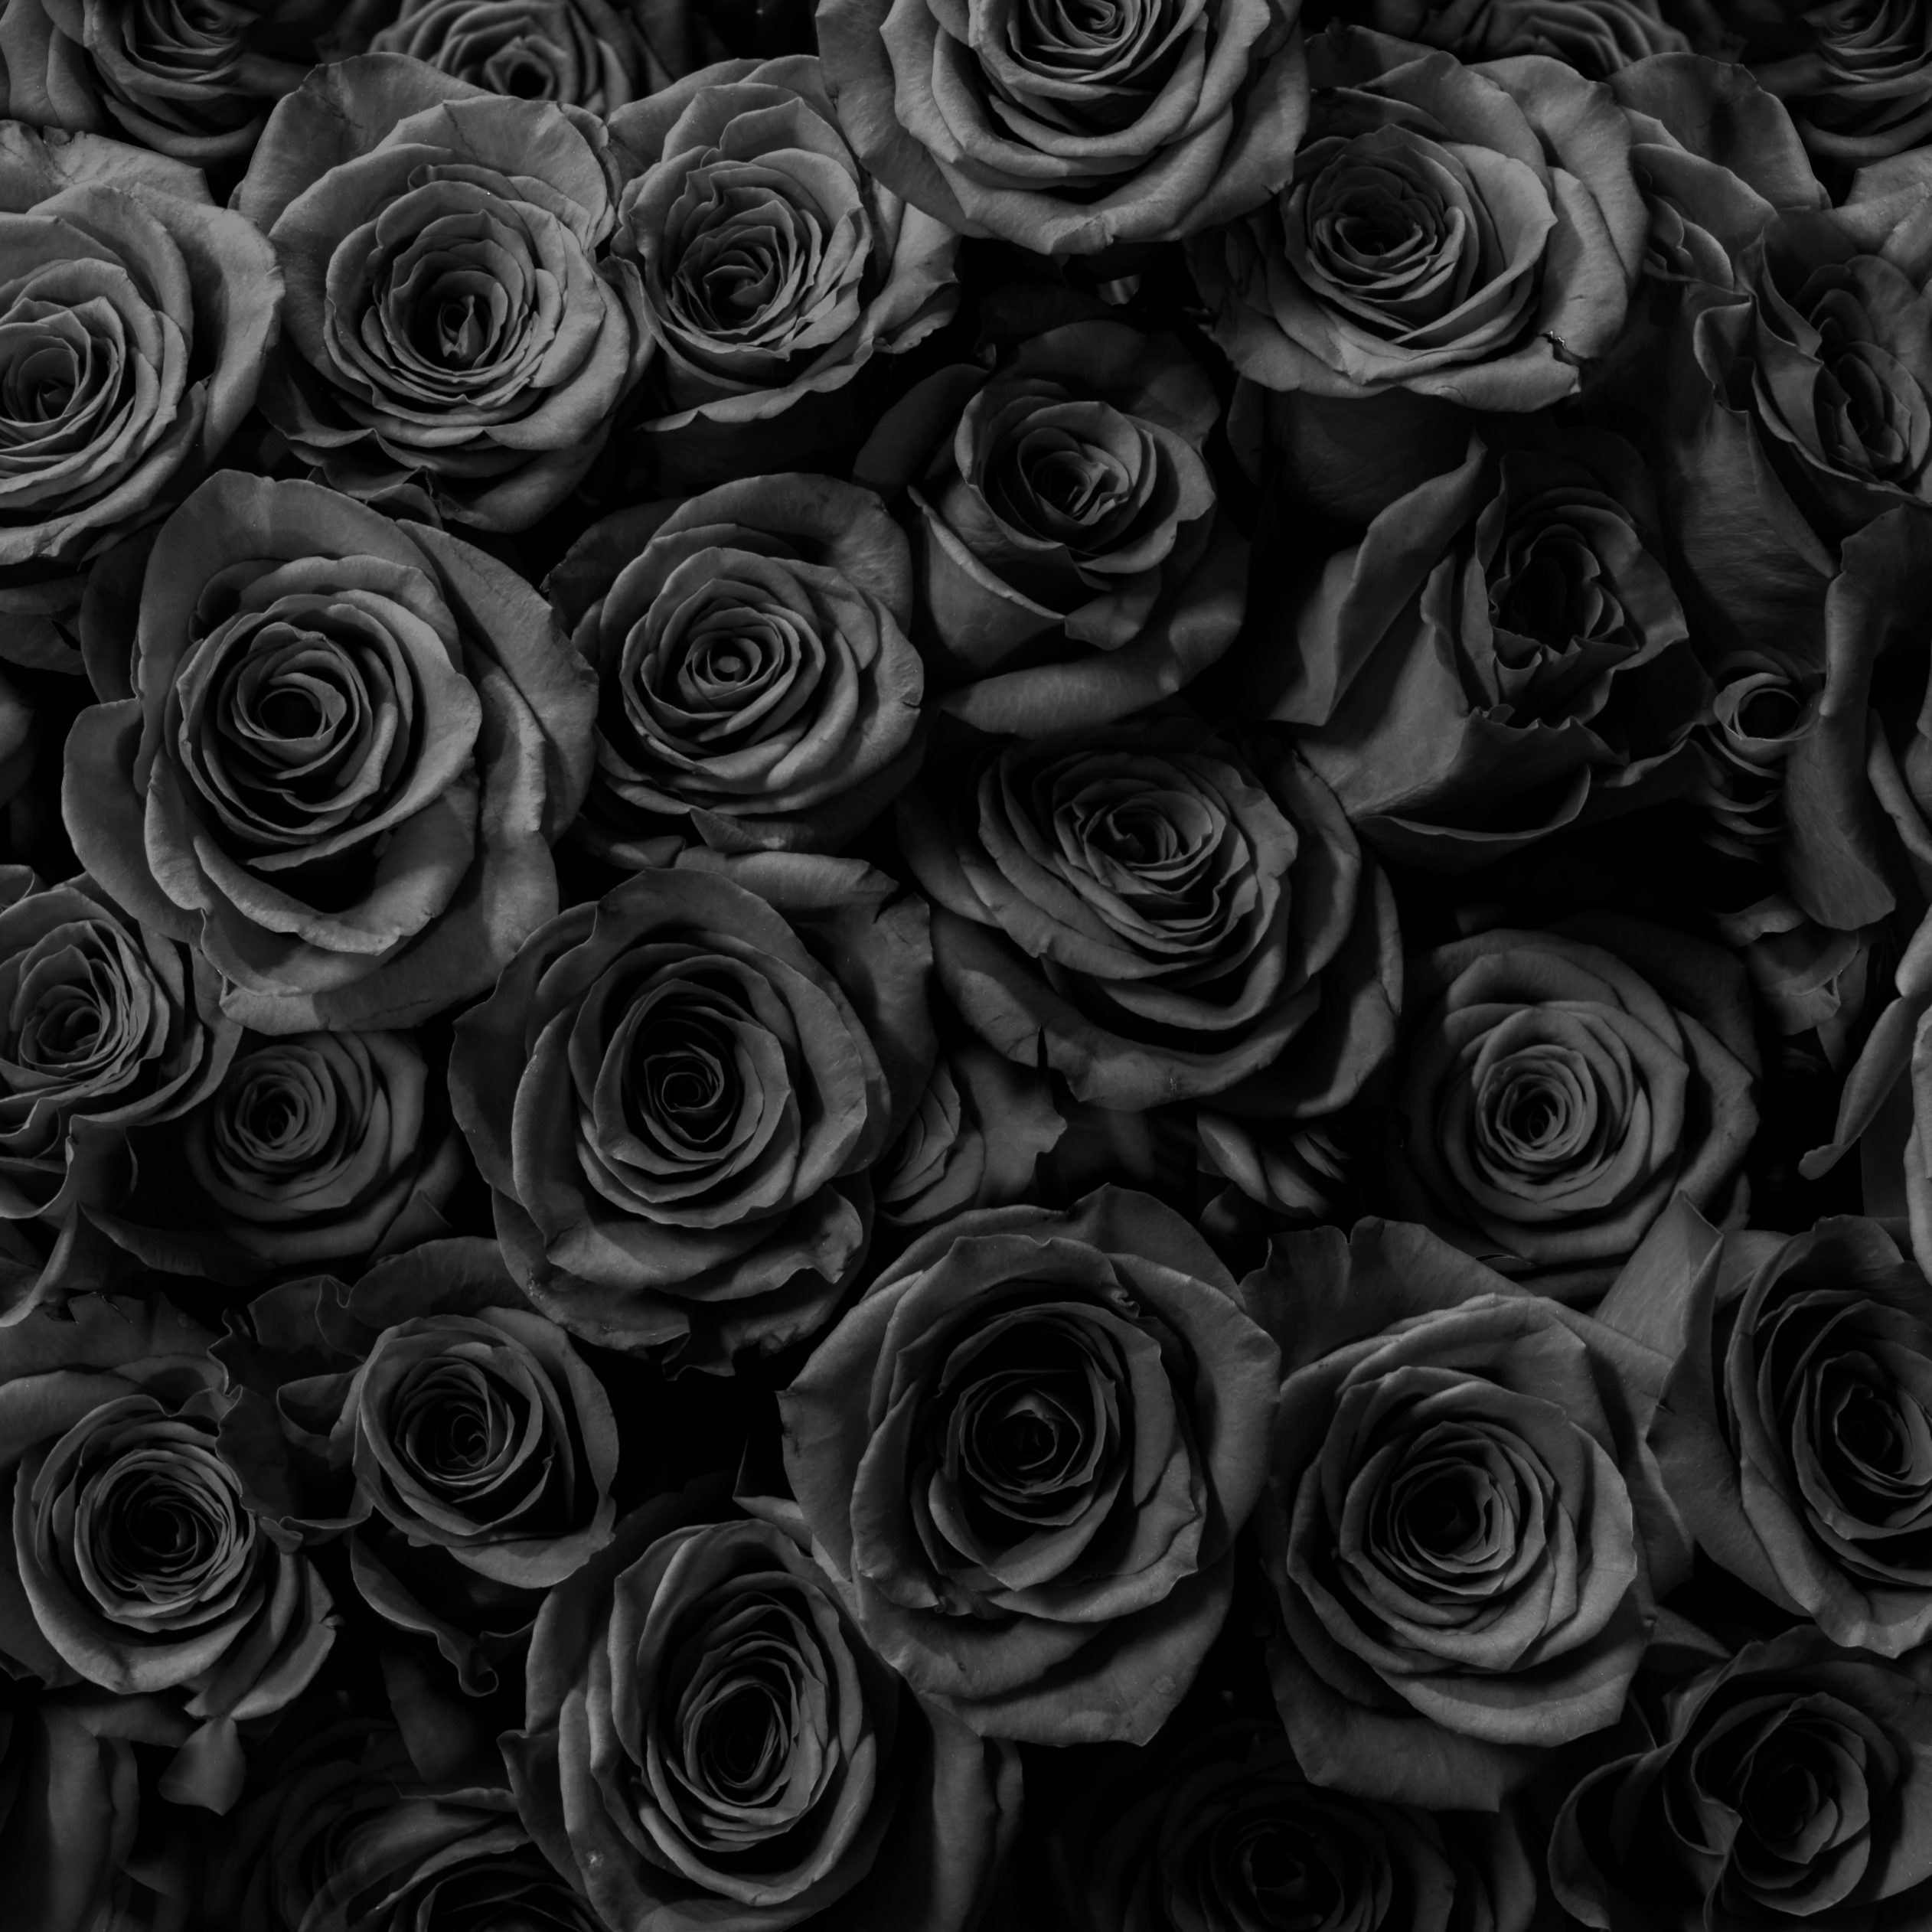 2524x2524 Parallax wallpaper 4k Black Roses Gift Anniversary iPad Wallpaper 2524x2524 pixels resolution